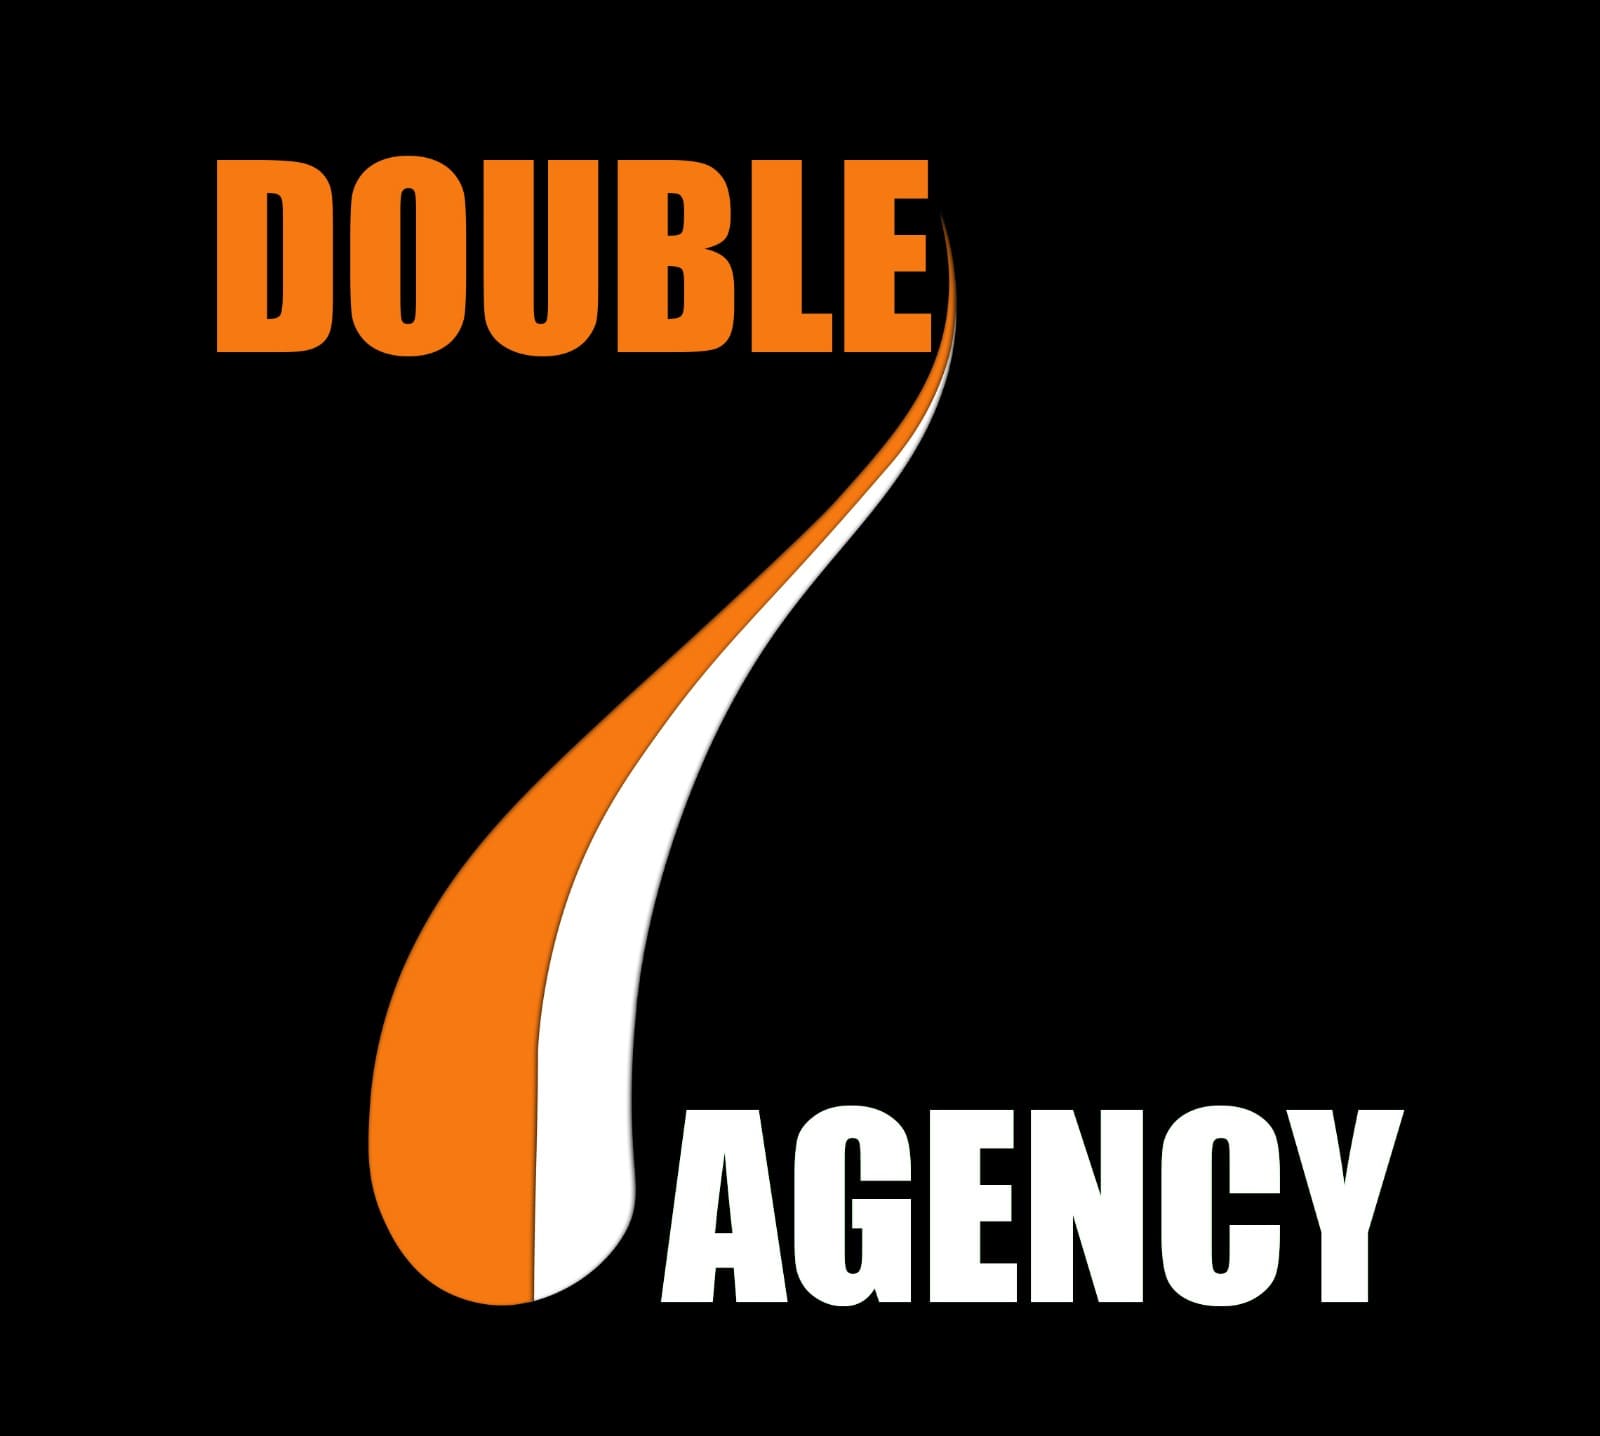 Double 7 Agency